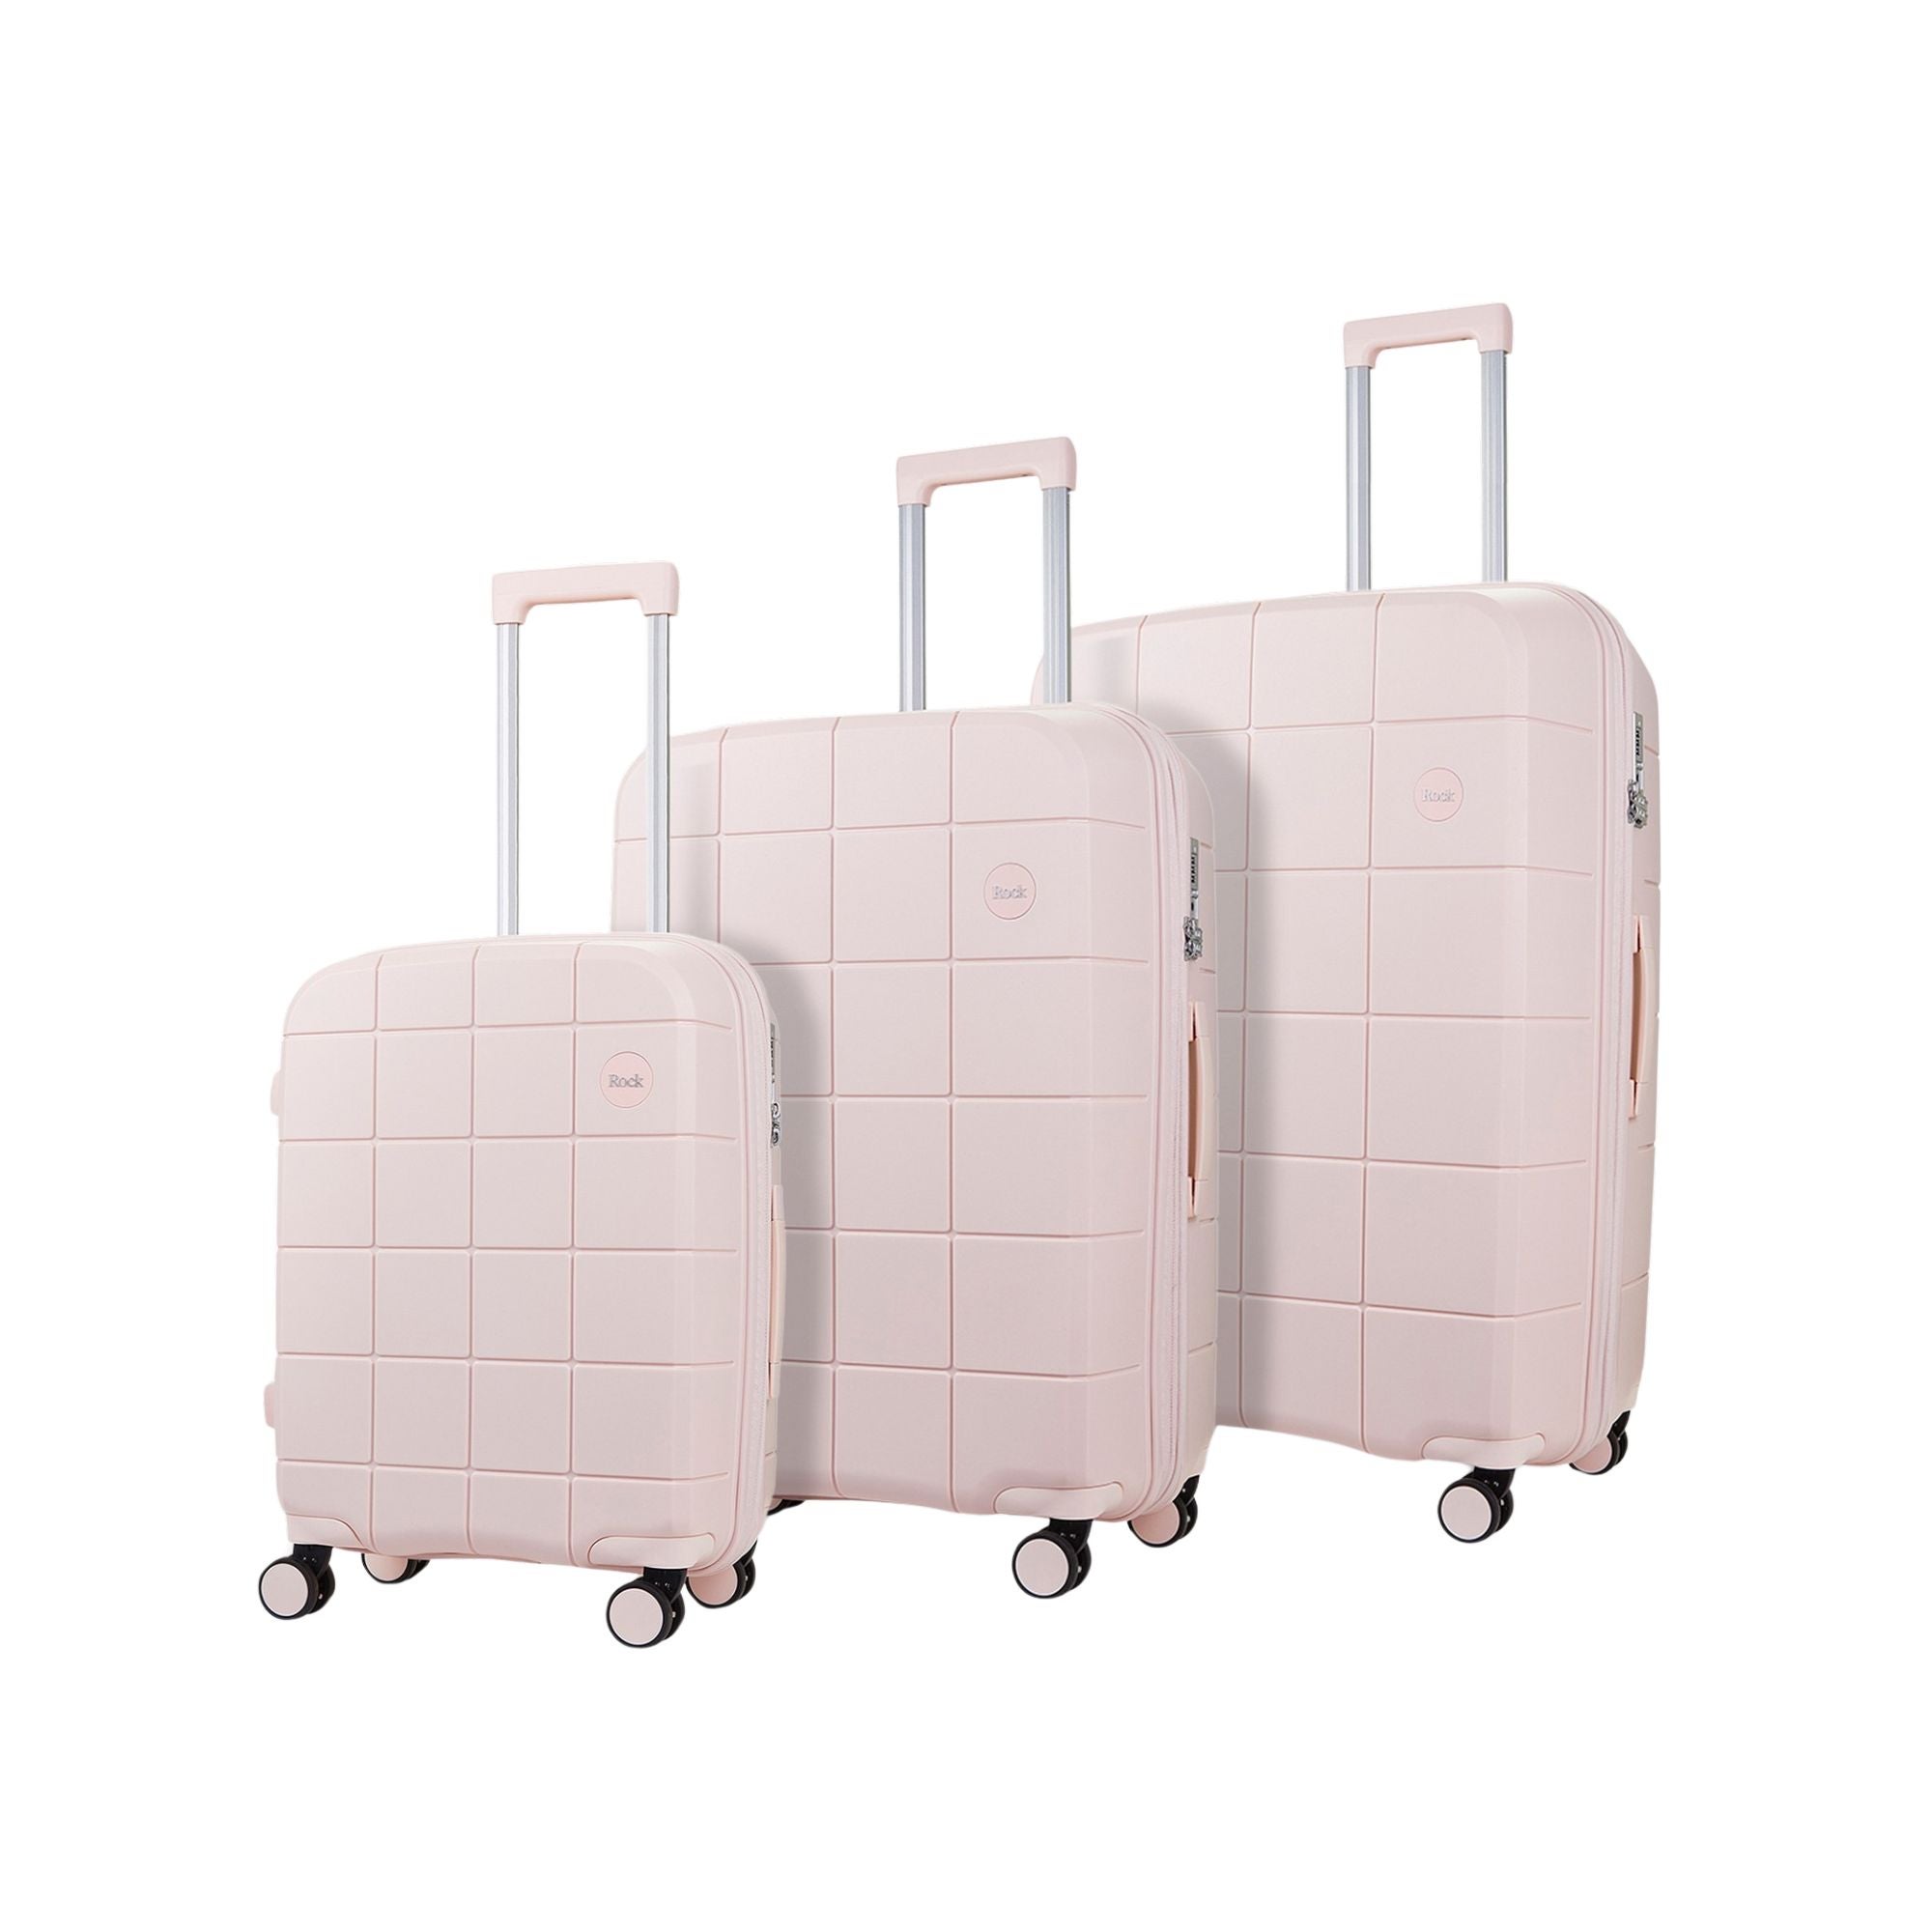 Rock Luggage Pixel Set of 3 Suitcases